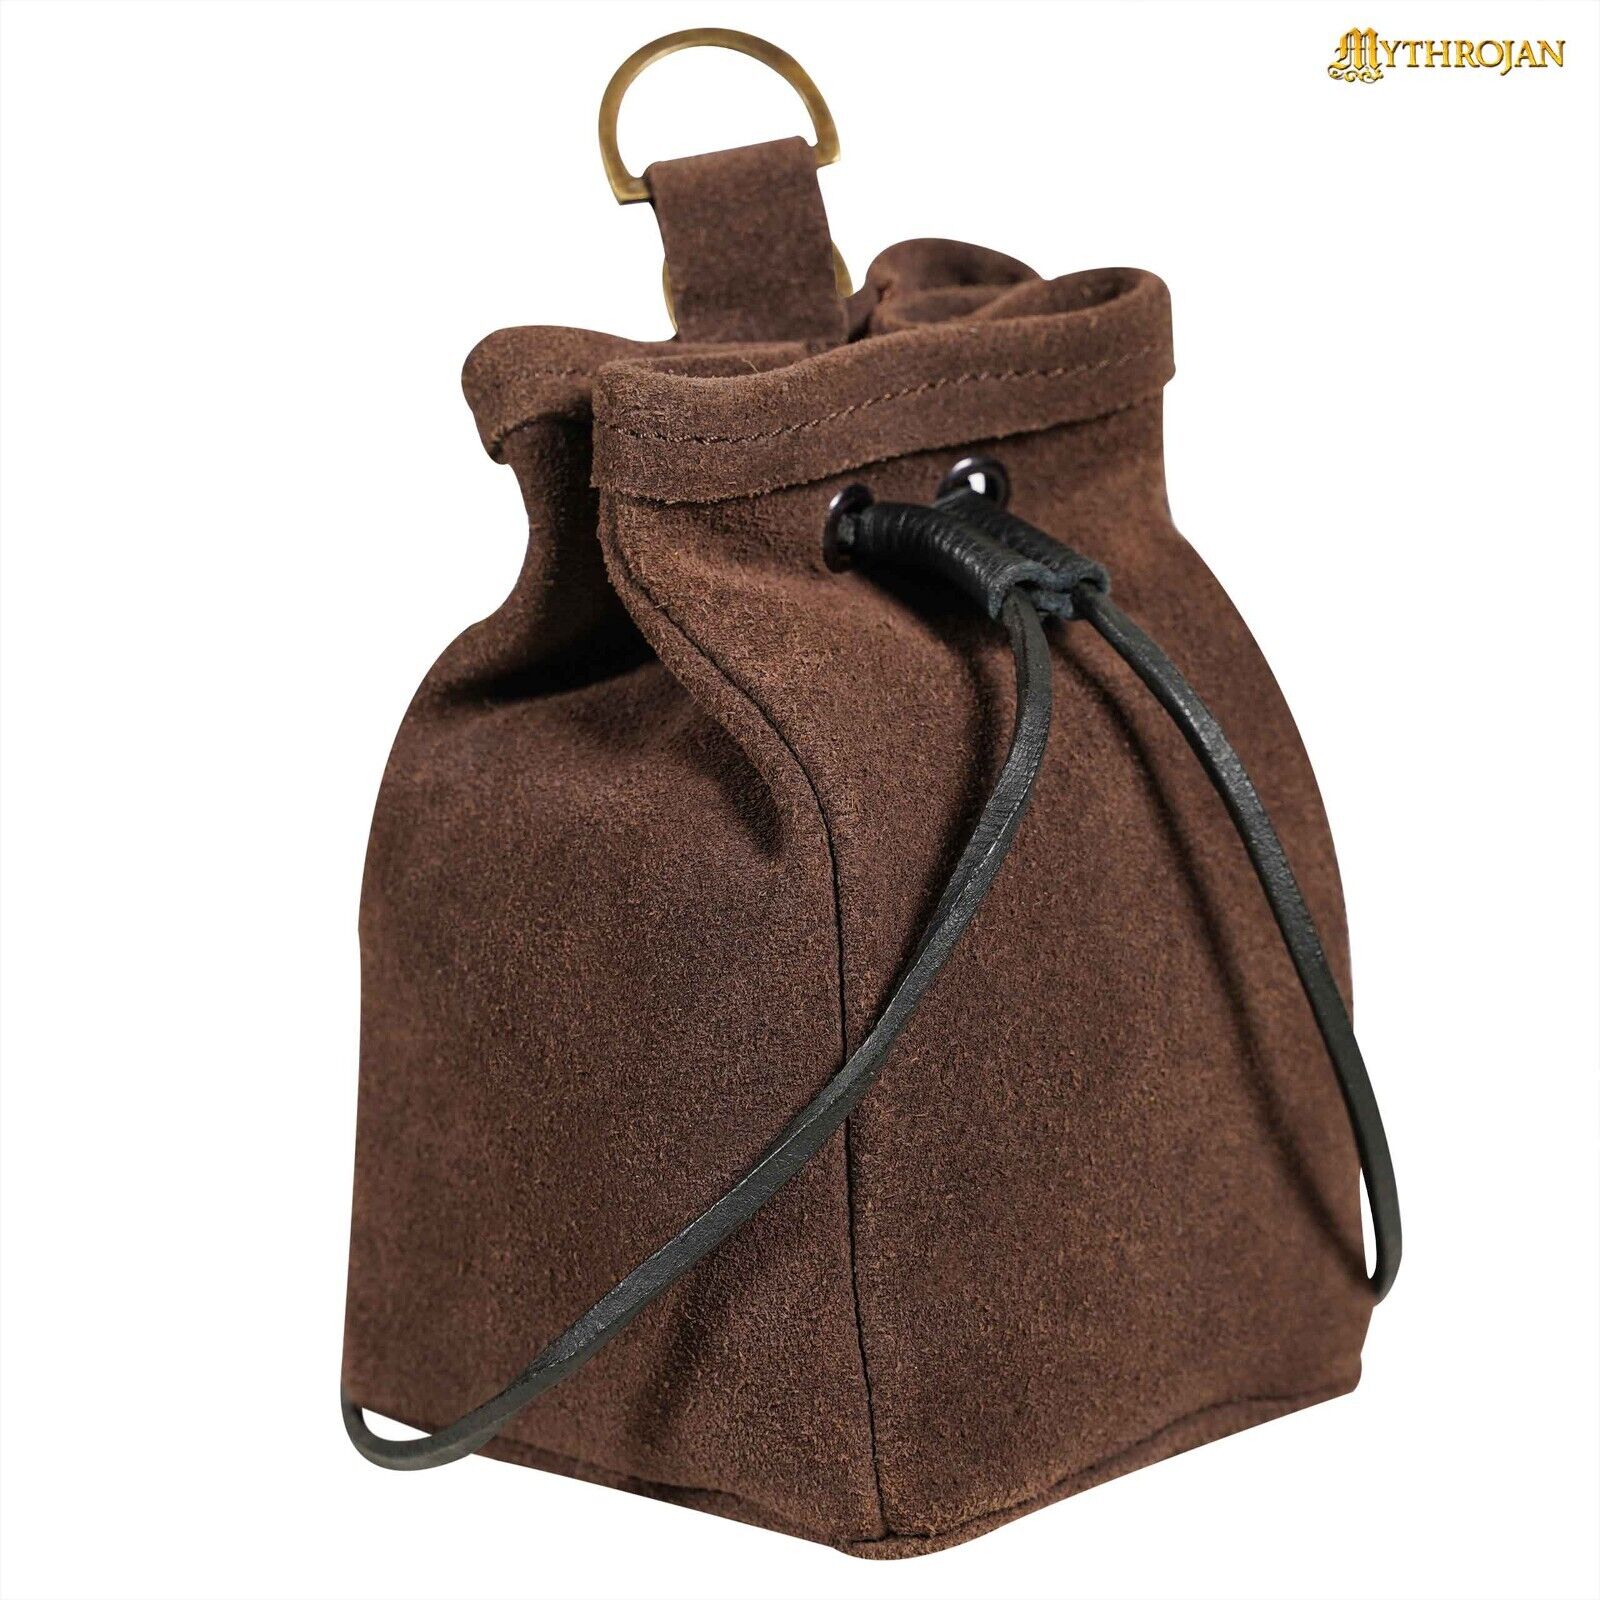 Medieval Leather Pouch Renaissance SCA Belt Bag Drawstring Closure Brown Suede